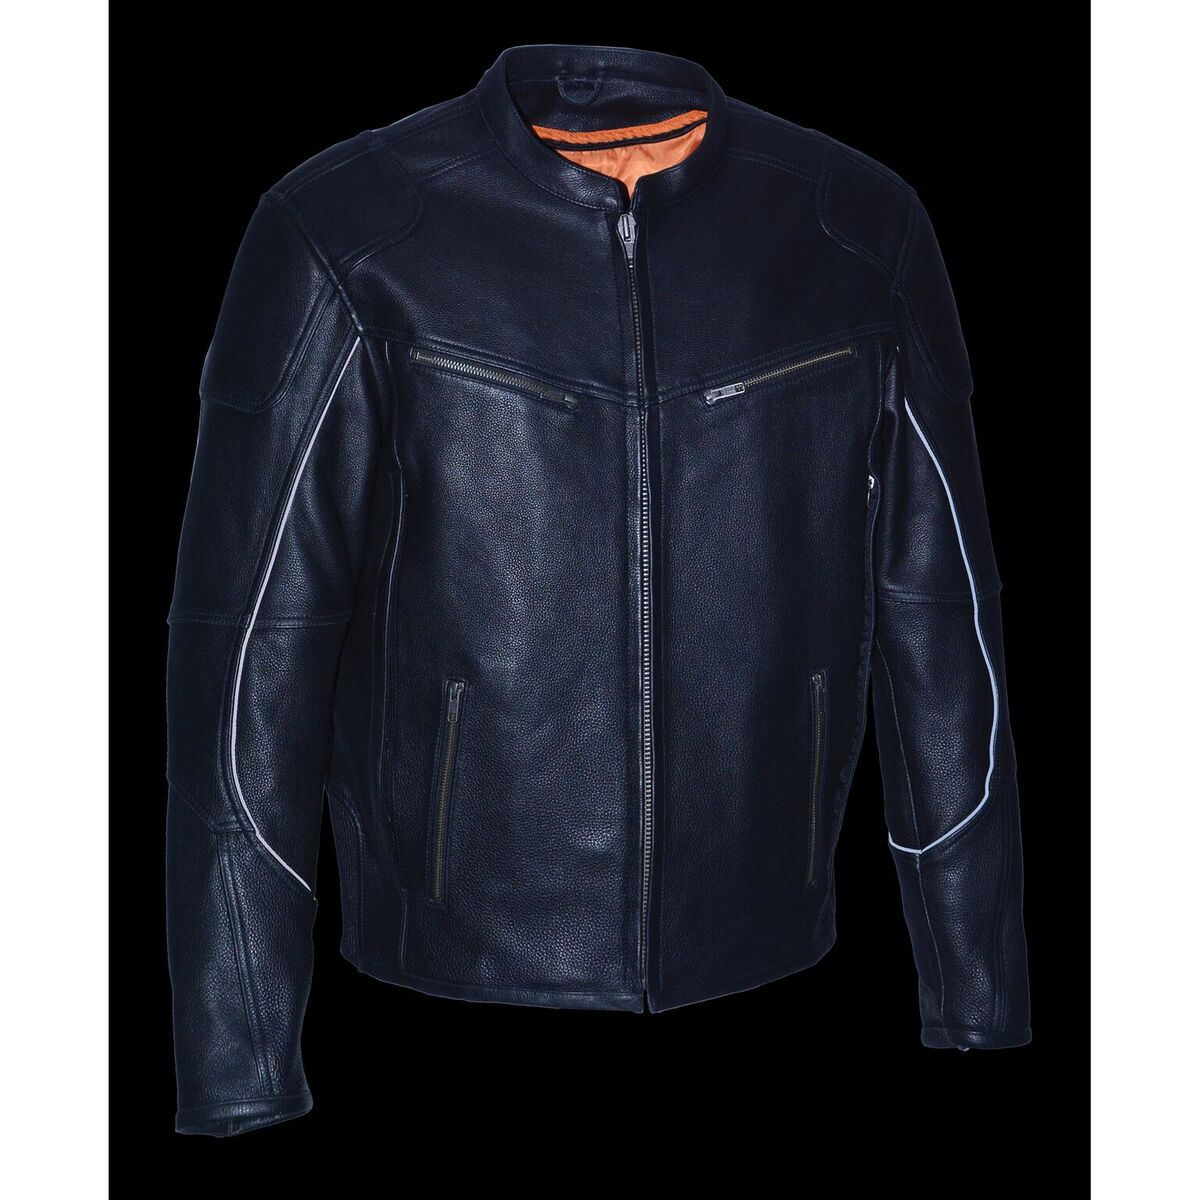 Milwaukee Leather Men's Leather Motorcycle Jacket